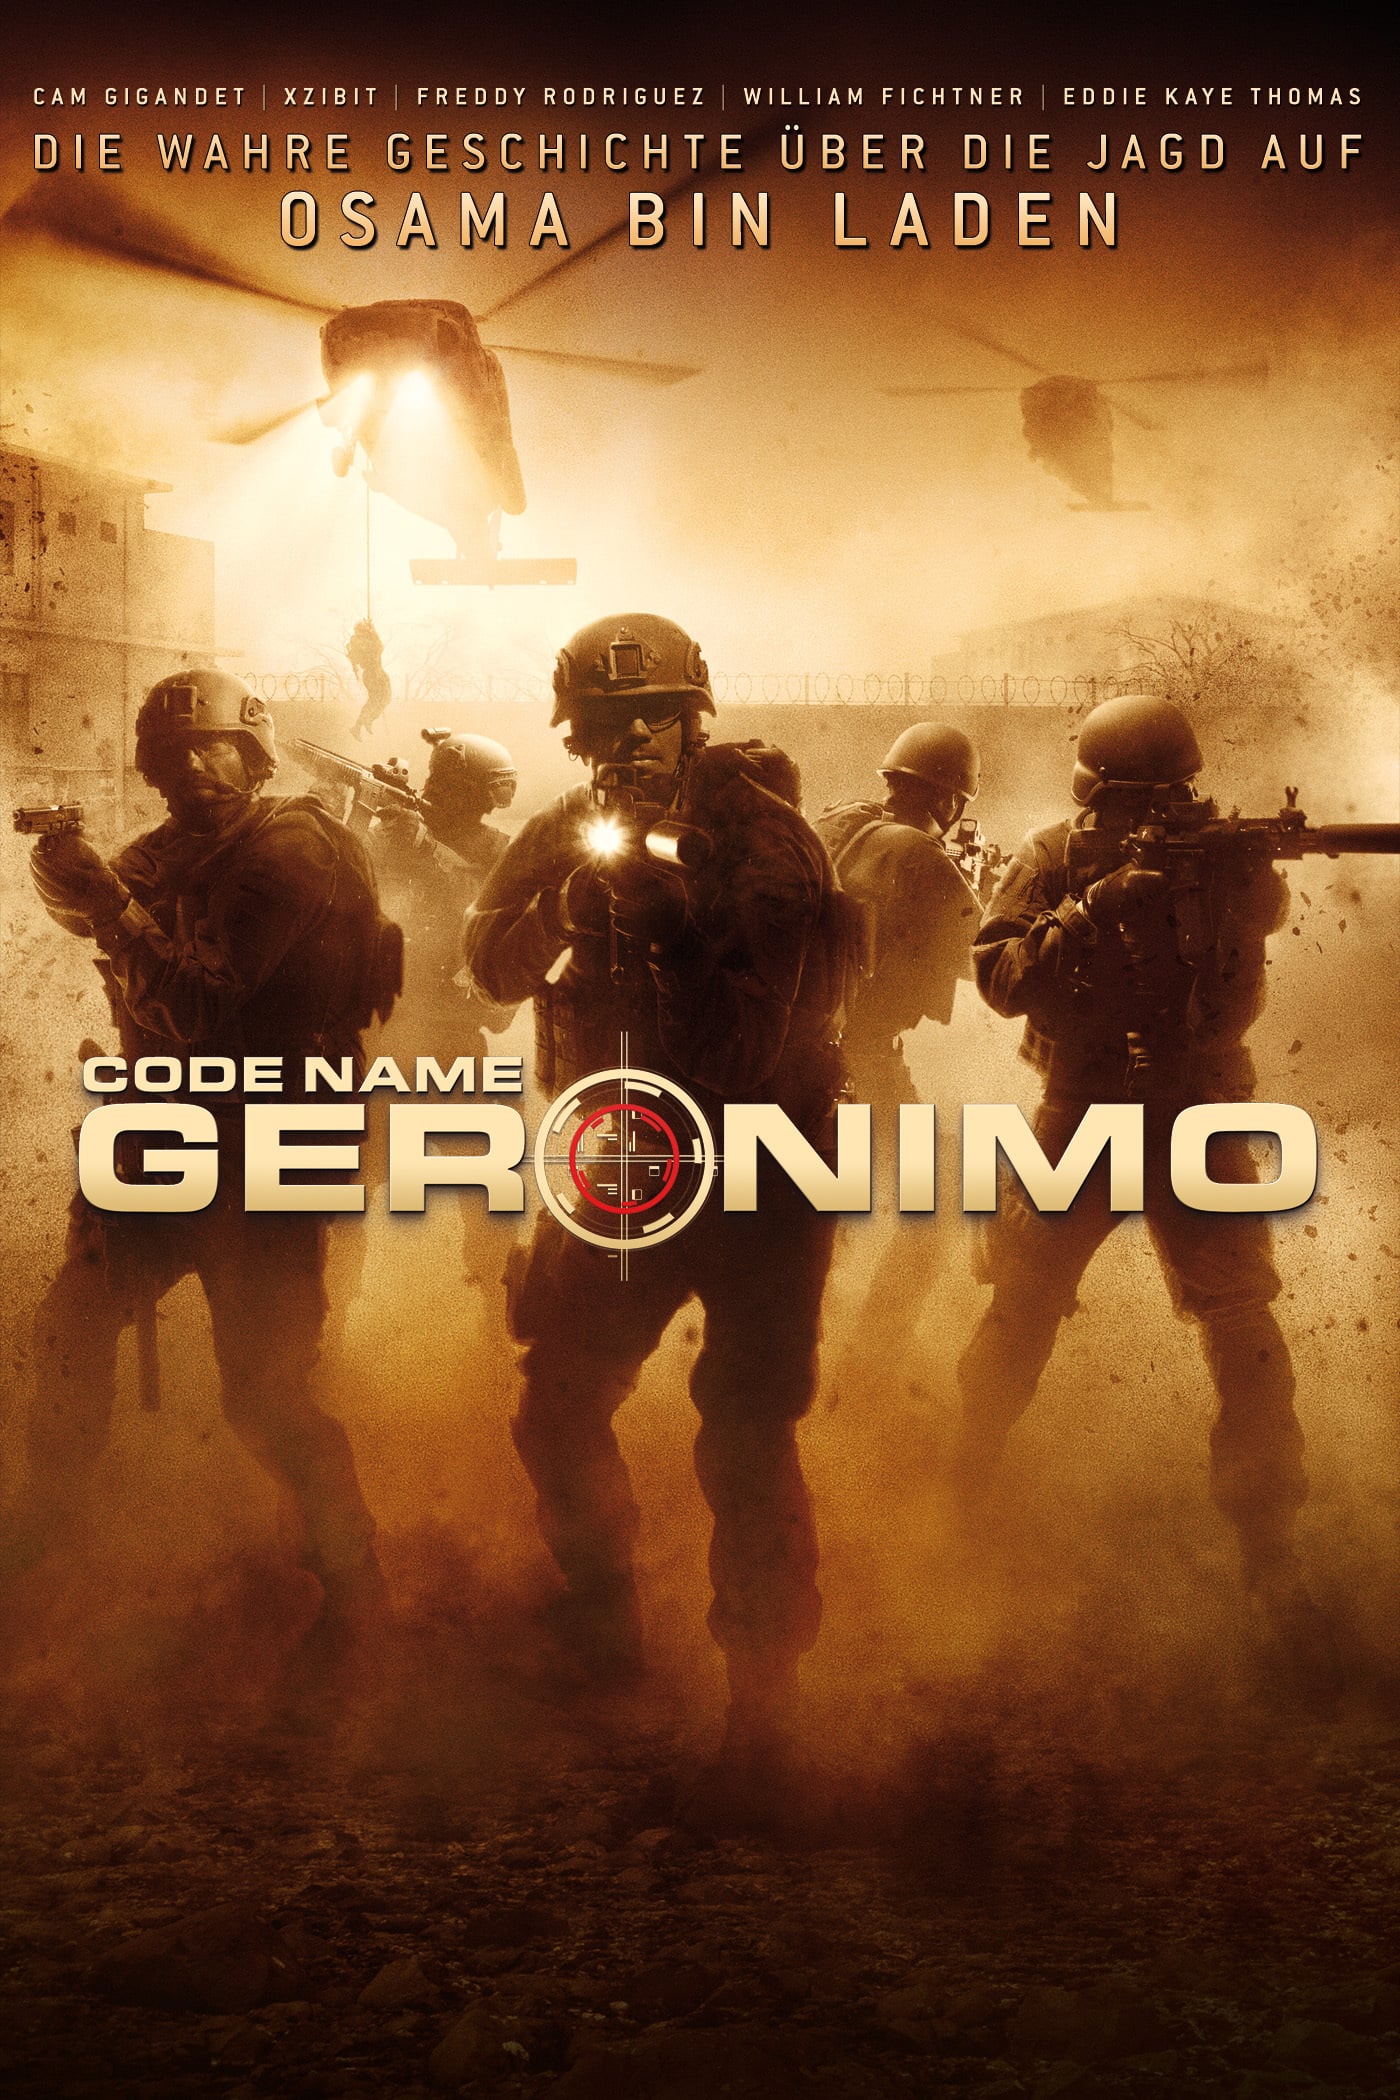 Plakat von "Code Name: Geronimo"